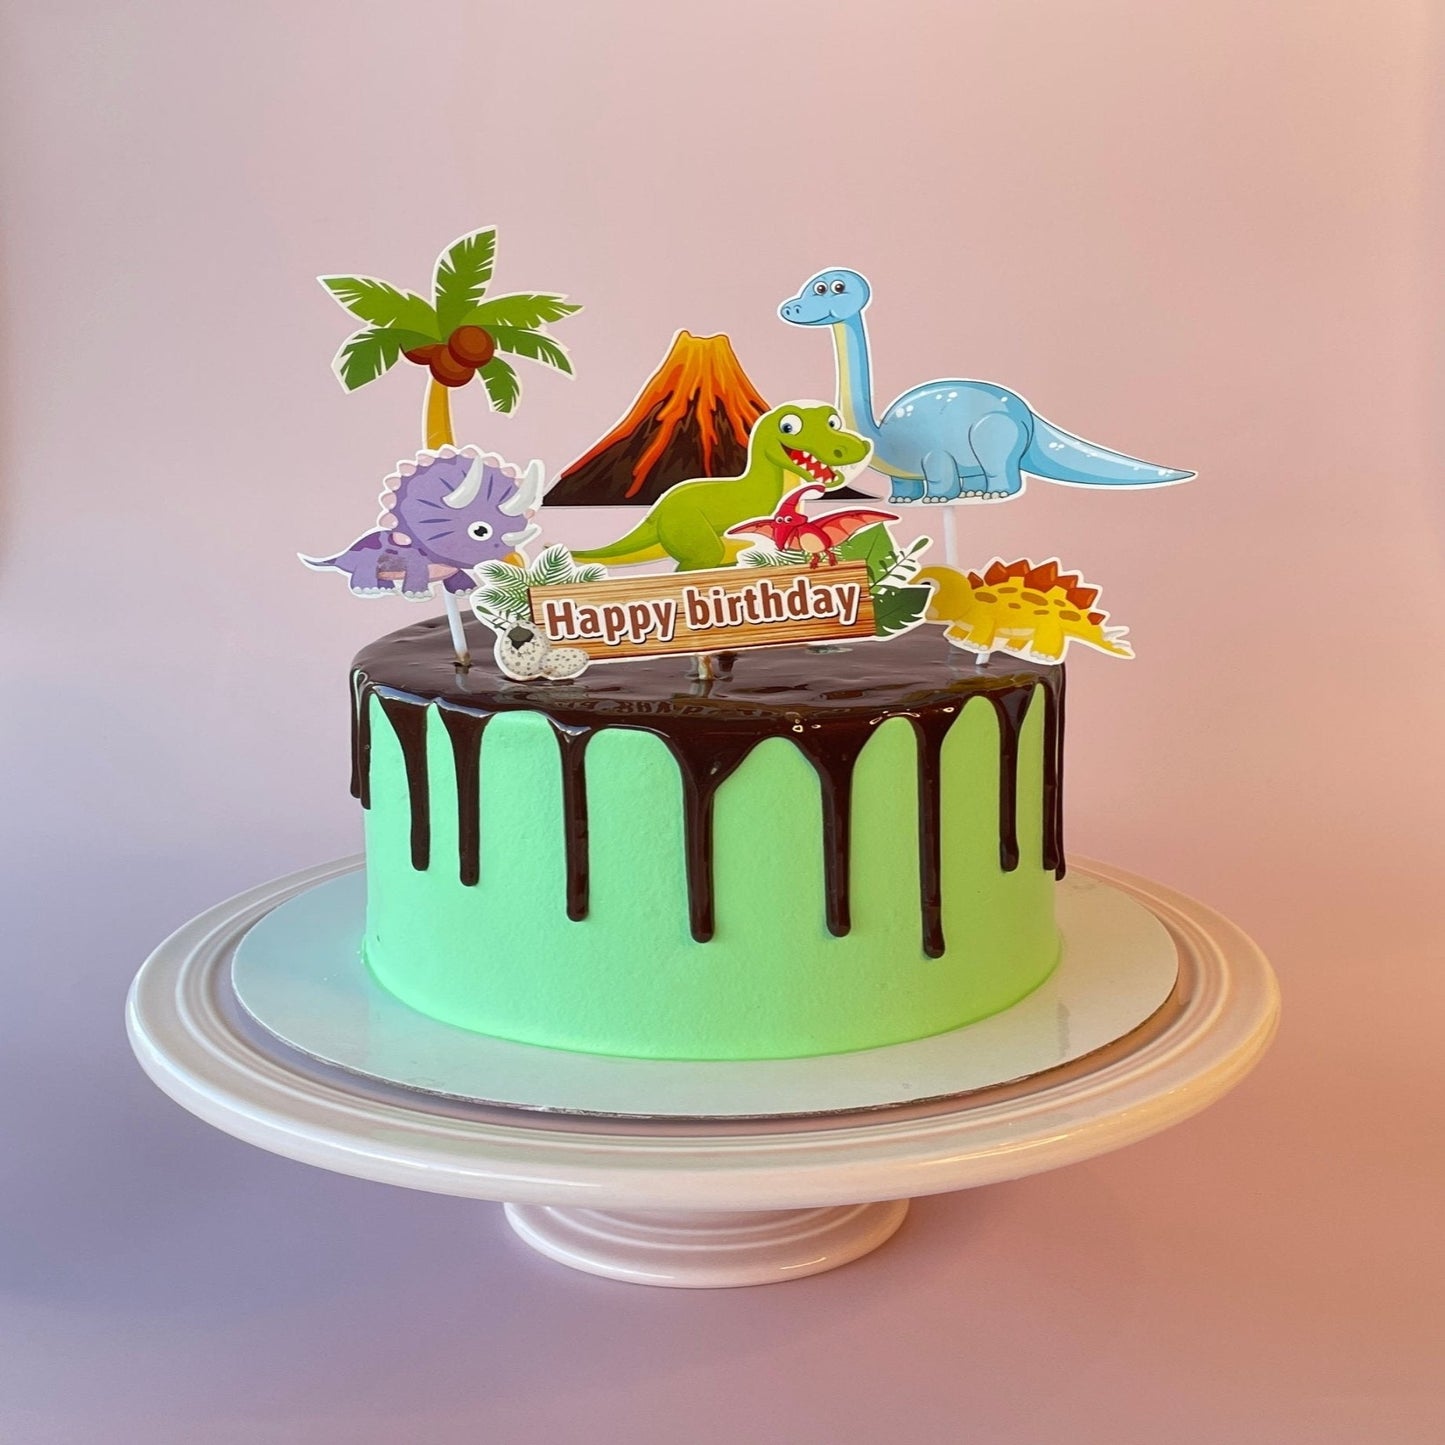 Forest Dinosaur Cake SG/Boys Dinosaur cakes singapore - River Ash Bakery